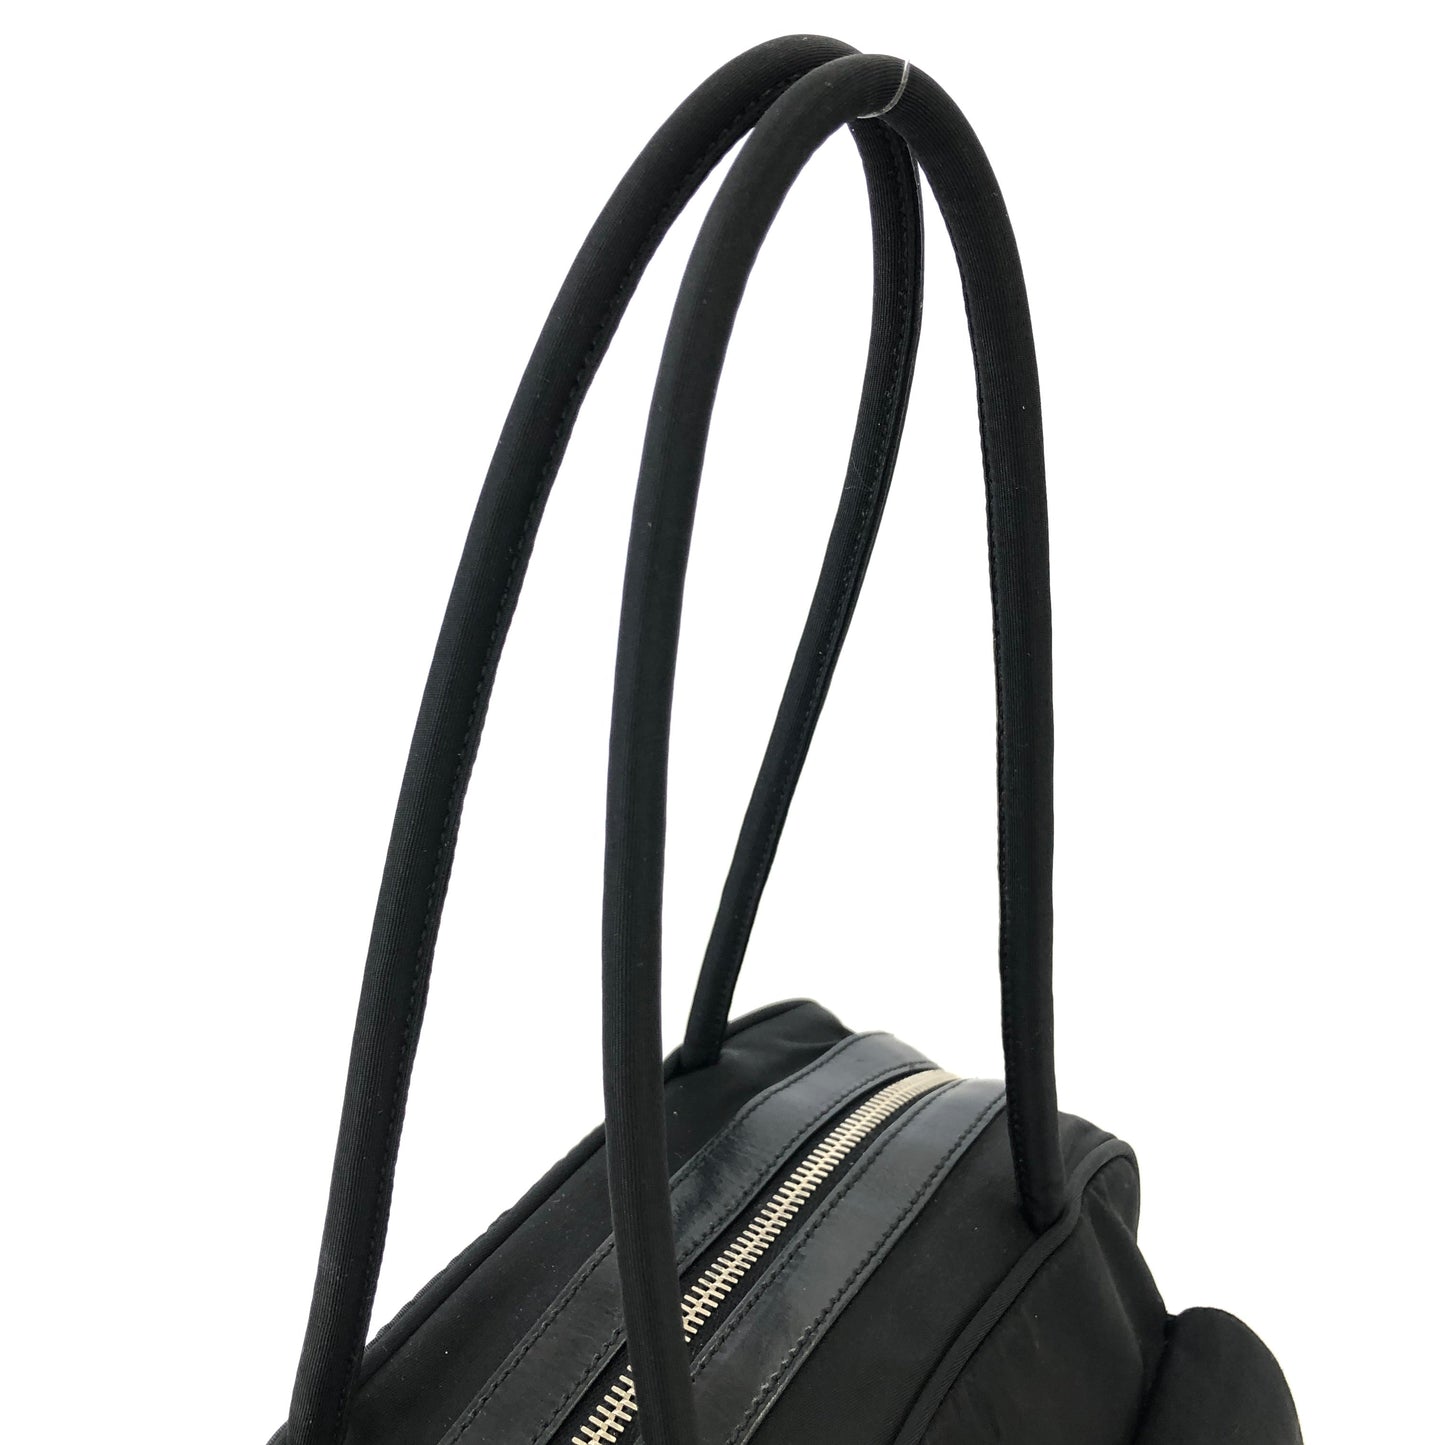 PRADA Triangle logo Double pocket Nylon Shoulder bag handbag Black Vintage Old icjnth